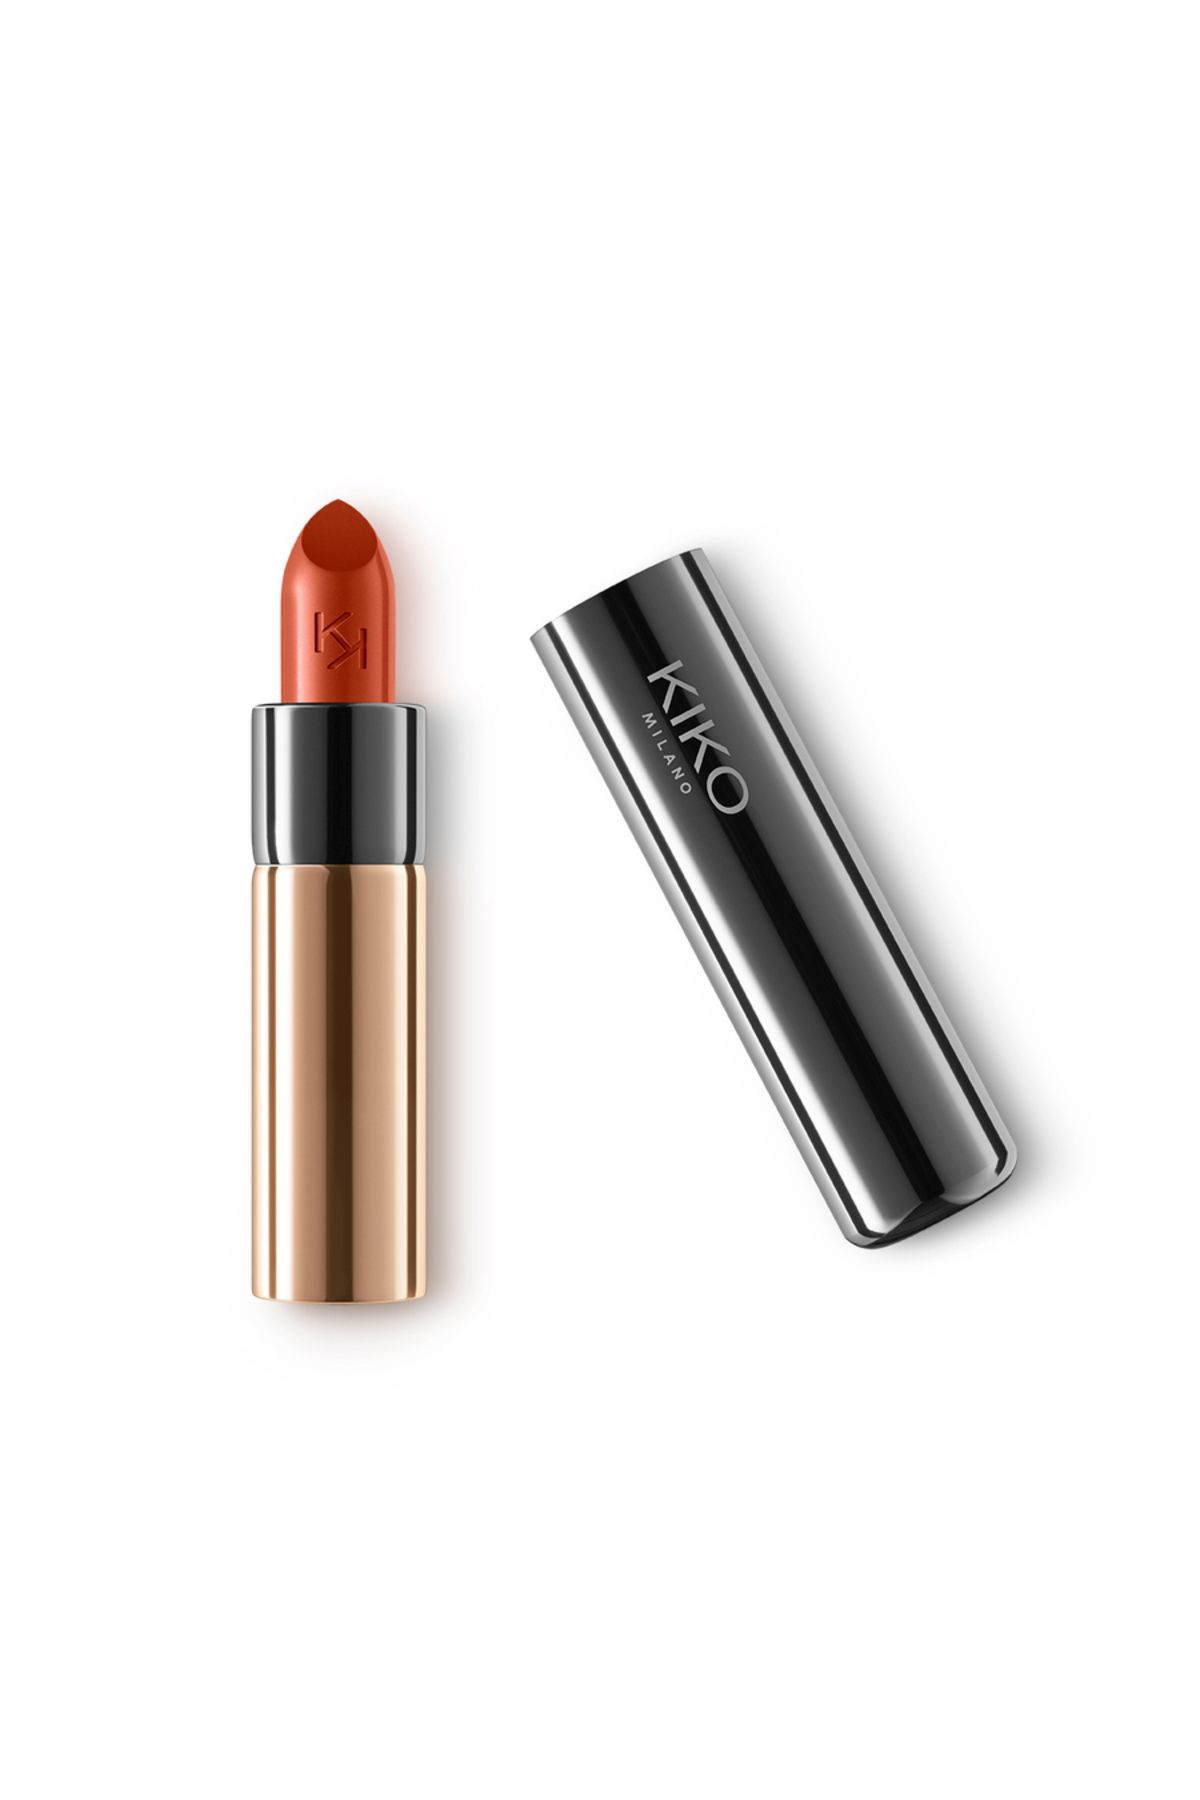 KIKO RUJ - Gossamer Emotion Creamy Lipstick - 139 Burnt Orange